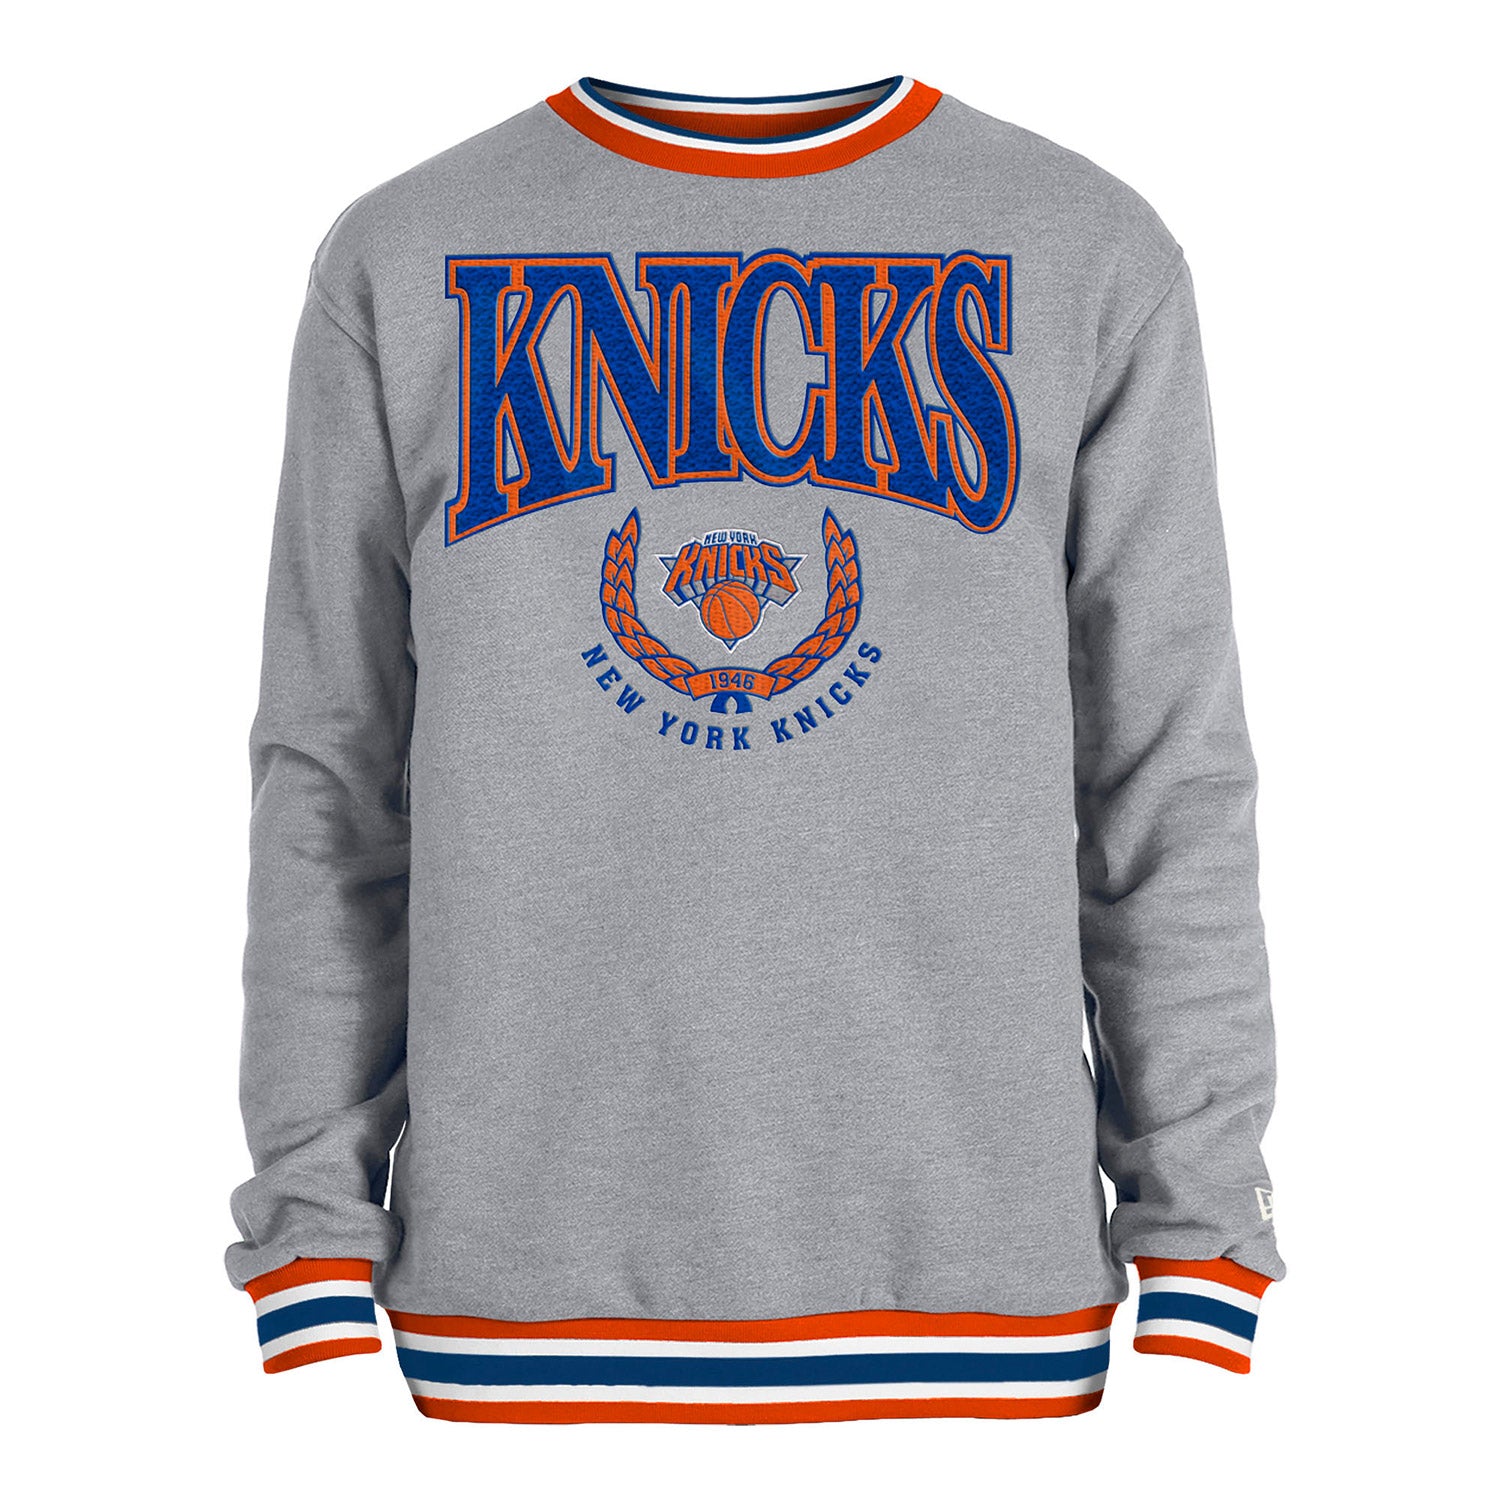 New Era Knicks Retro Ribbed Crewneck Fleece In Grey, Blue & Orange - Front View